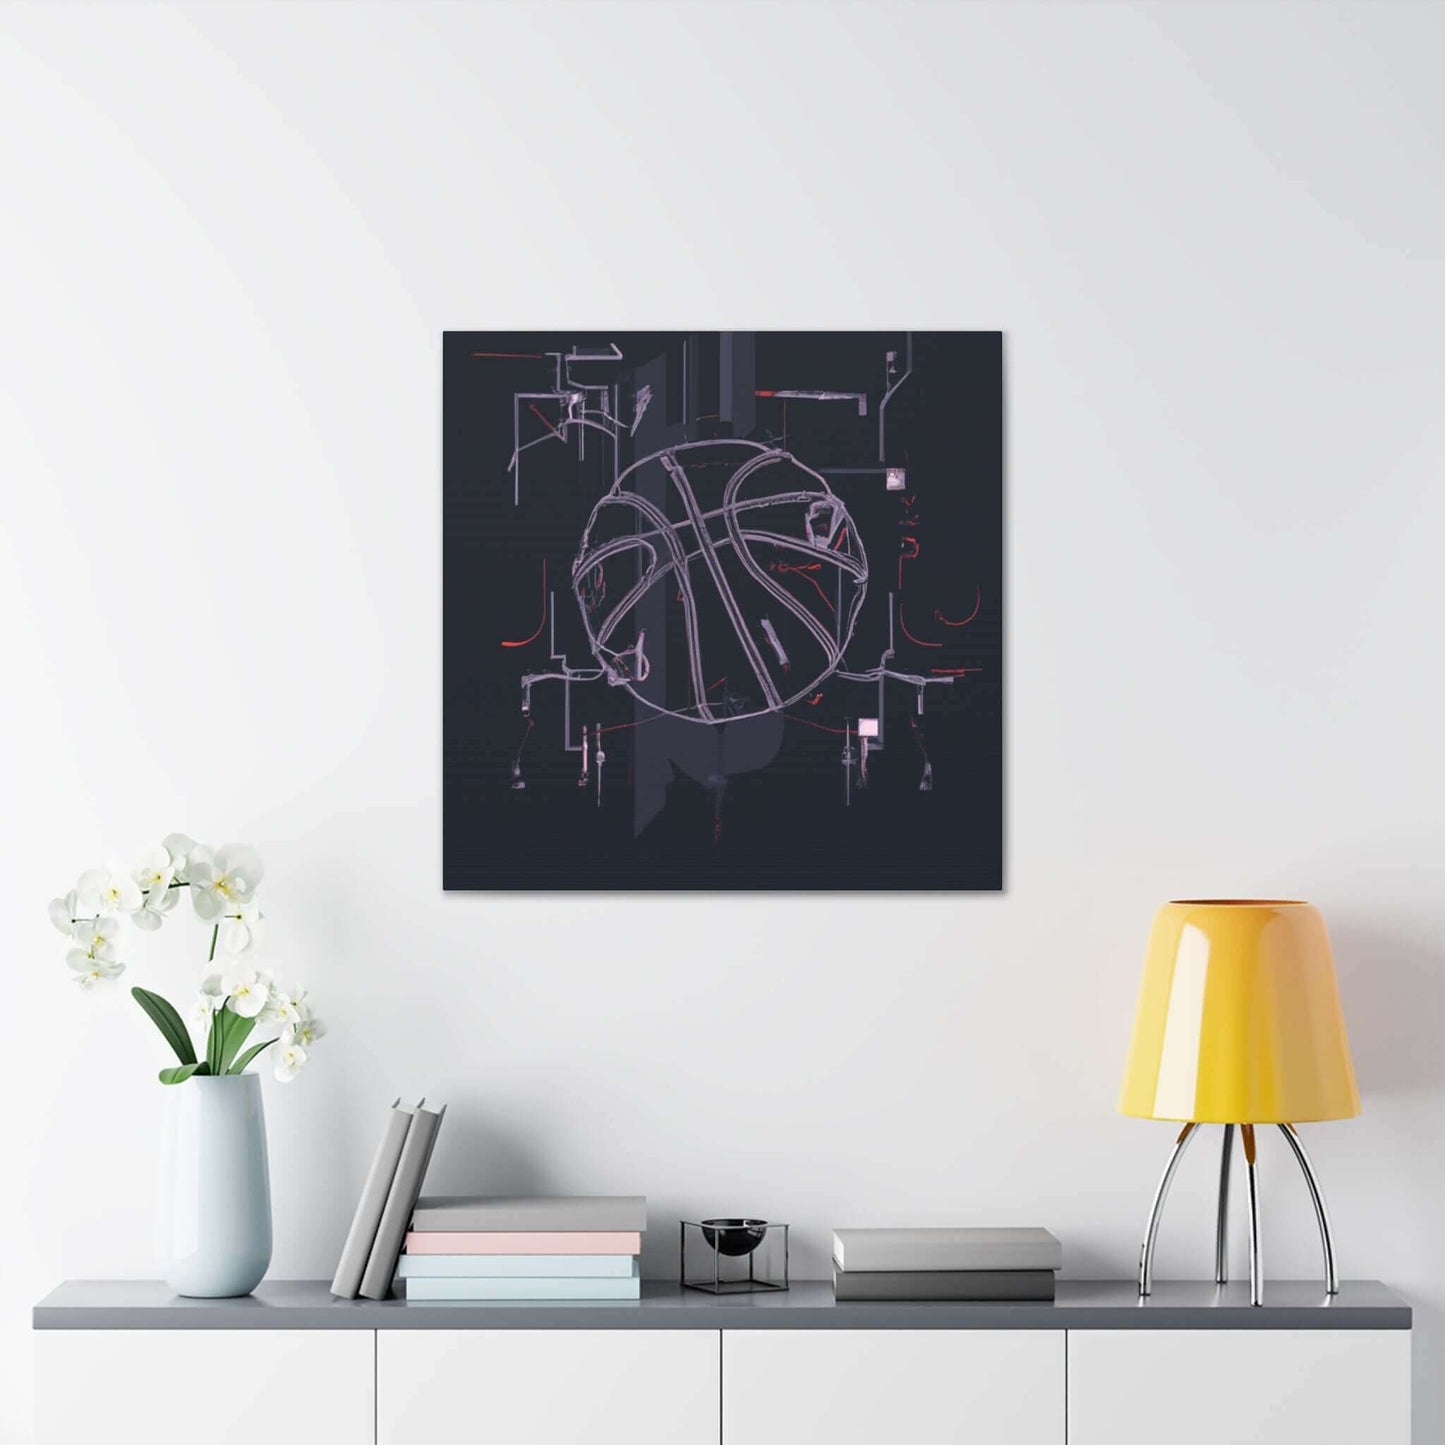 Hoop Dreams Limited Edition Canvas Print - Canvas - Basketball Art 